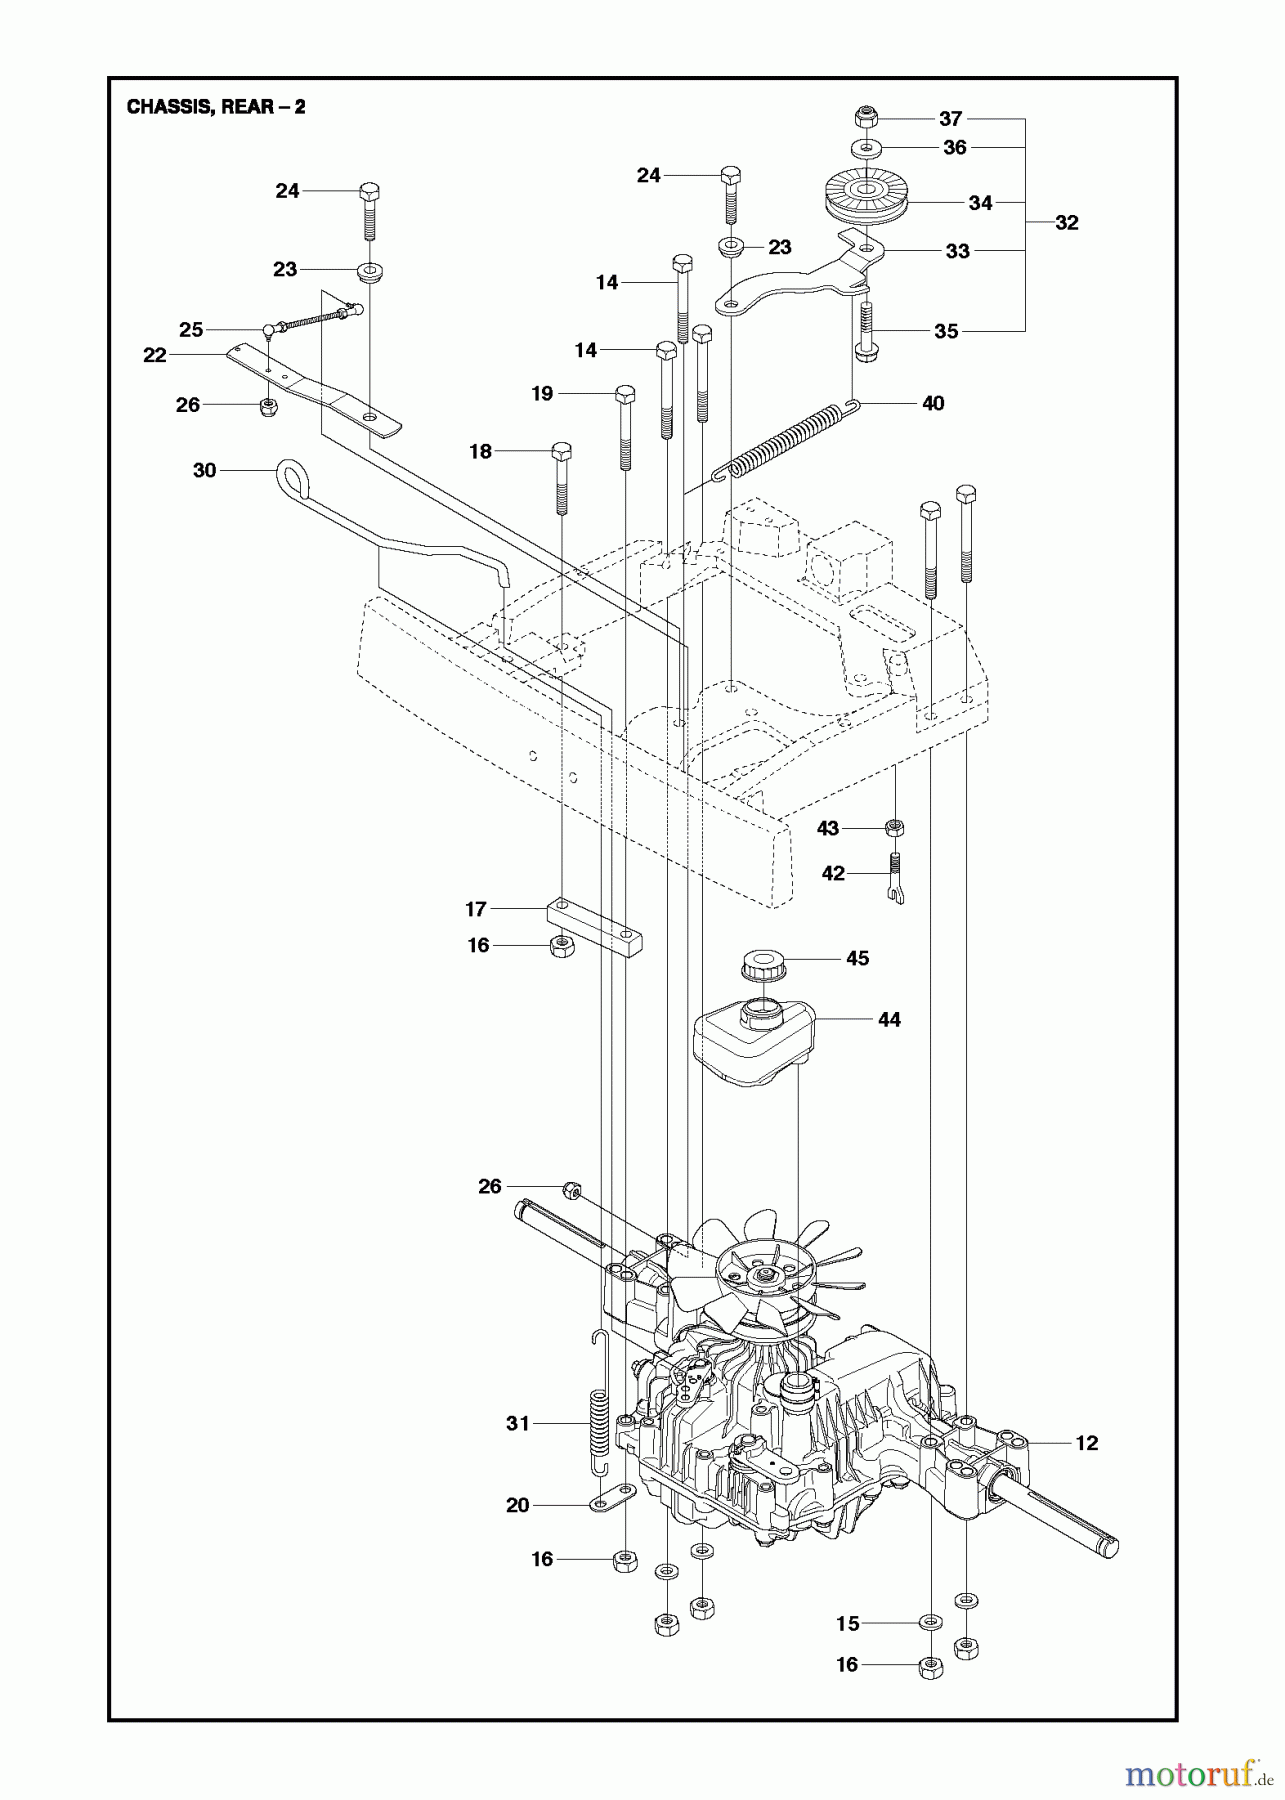  Jonsered Reitermäher FR2218 FA (967179201) - Jonsered Rear-Engine Riding Mower (2013) CHASSIS REAR #2